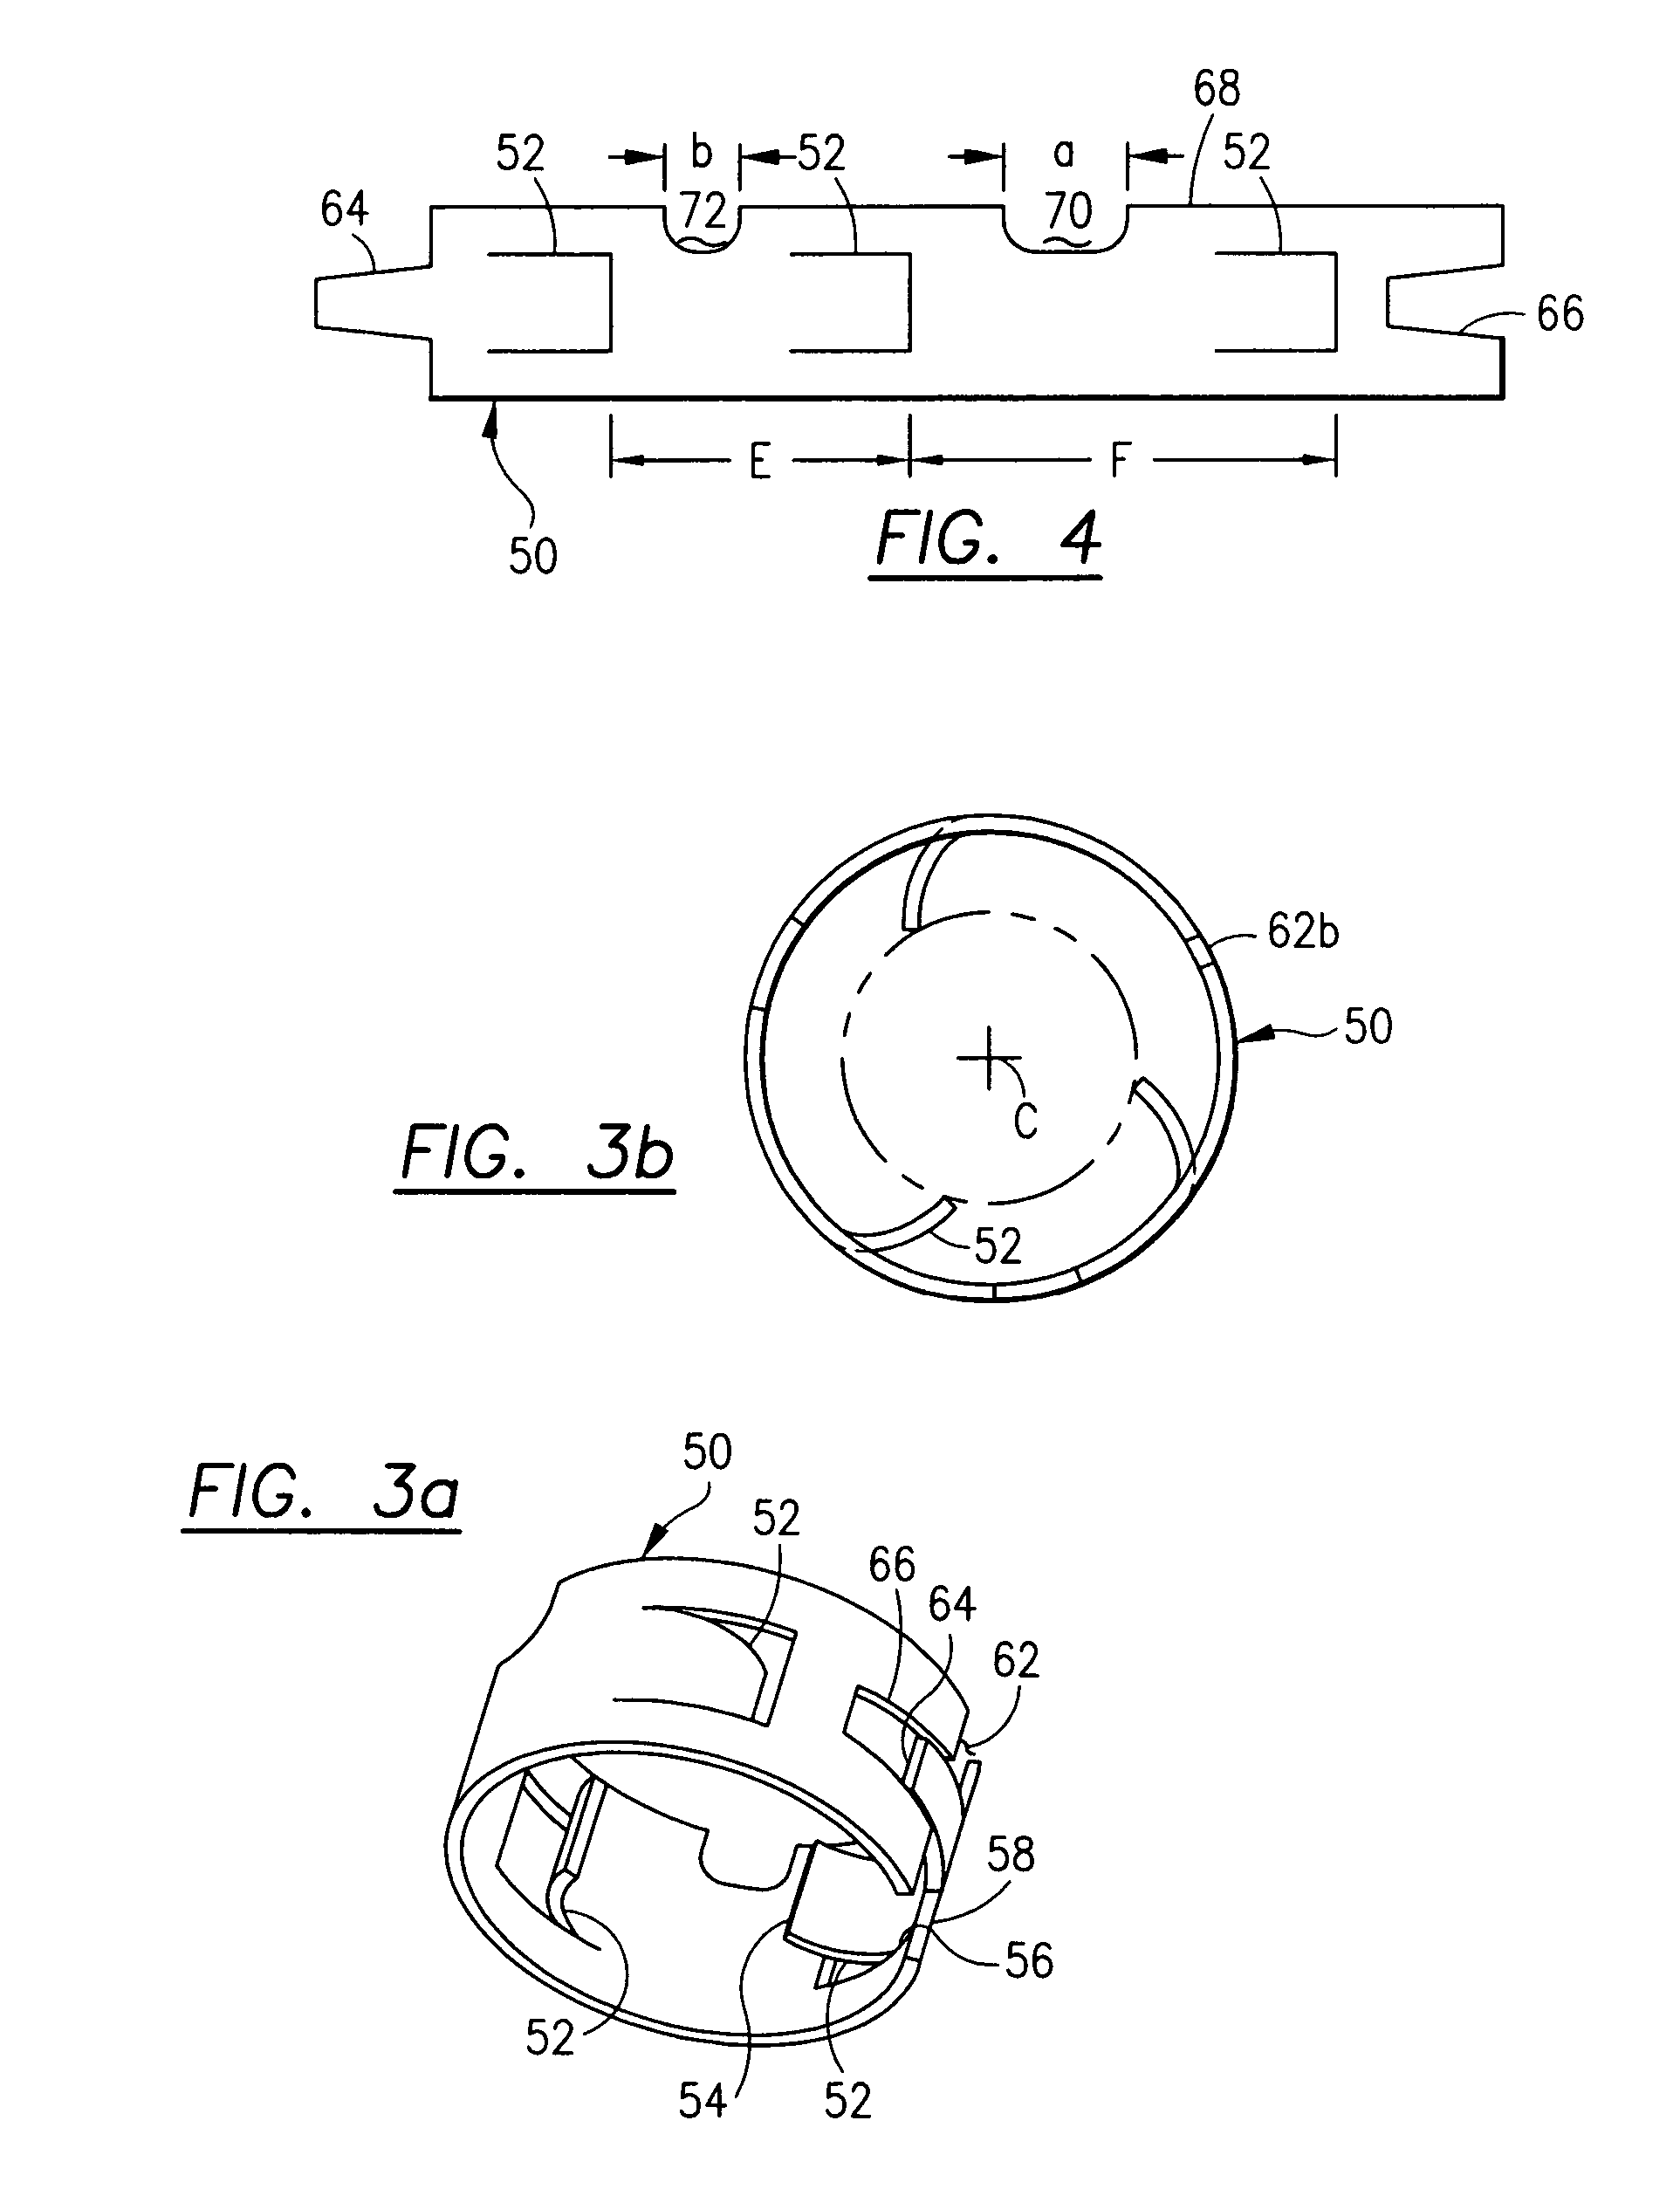 Locking nut and bolt system with enhanced locking